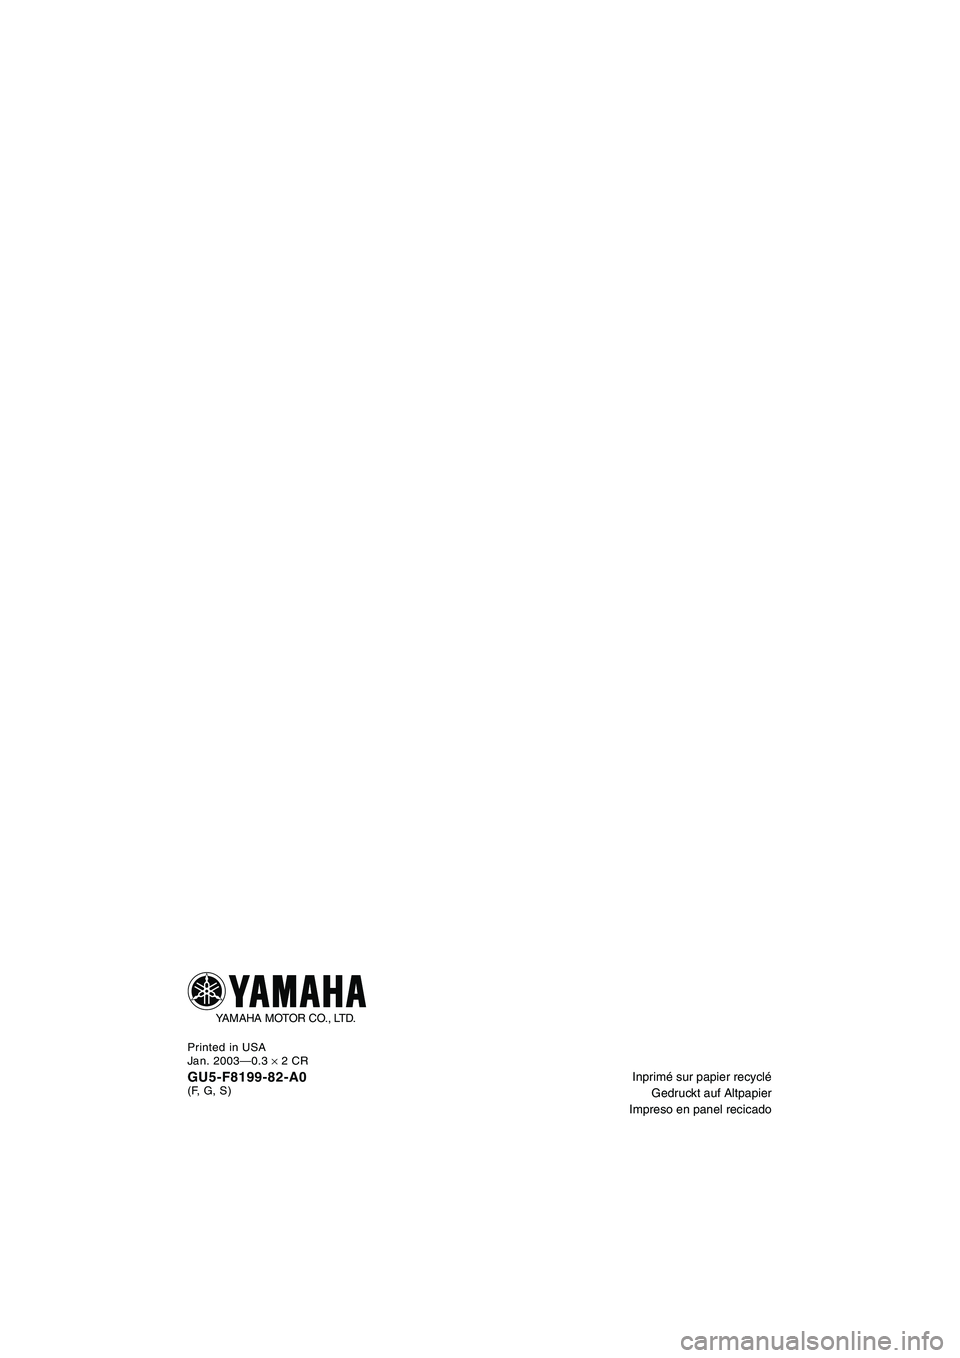 YAMAHA SUV 1200 2003  Manuale de Empleo (in Spanish) Inprimé sur papier recyclé
Gedruckt auf Altpapier
Impreso en panel recicado
Printed in USA
Jan. 2003—0.3 
× 2 CR
GU5-F8199-82-A0(F, G, S)
YAMAHA MOTOR CO., LTD.
00-Cover4_GU5_82-A.fm  Page 1  Fri